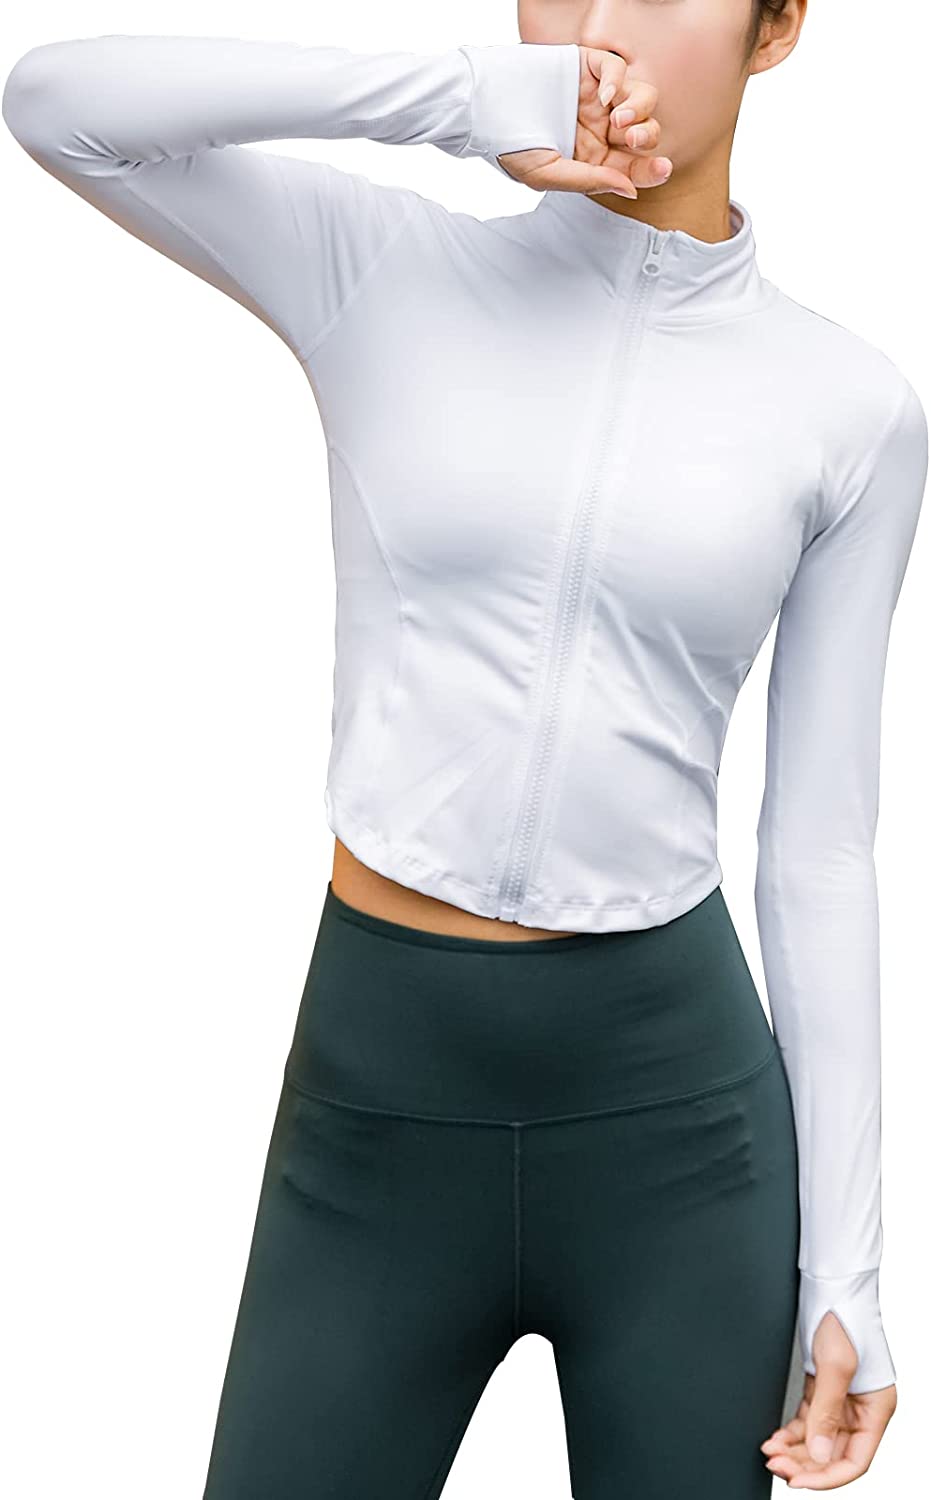 Vsaiddt Womens Athletic Half Zip Sweatshirt Lightweight Quick Dry Workout Yoga Running Crop Tops